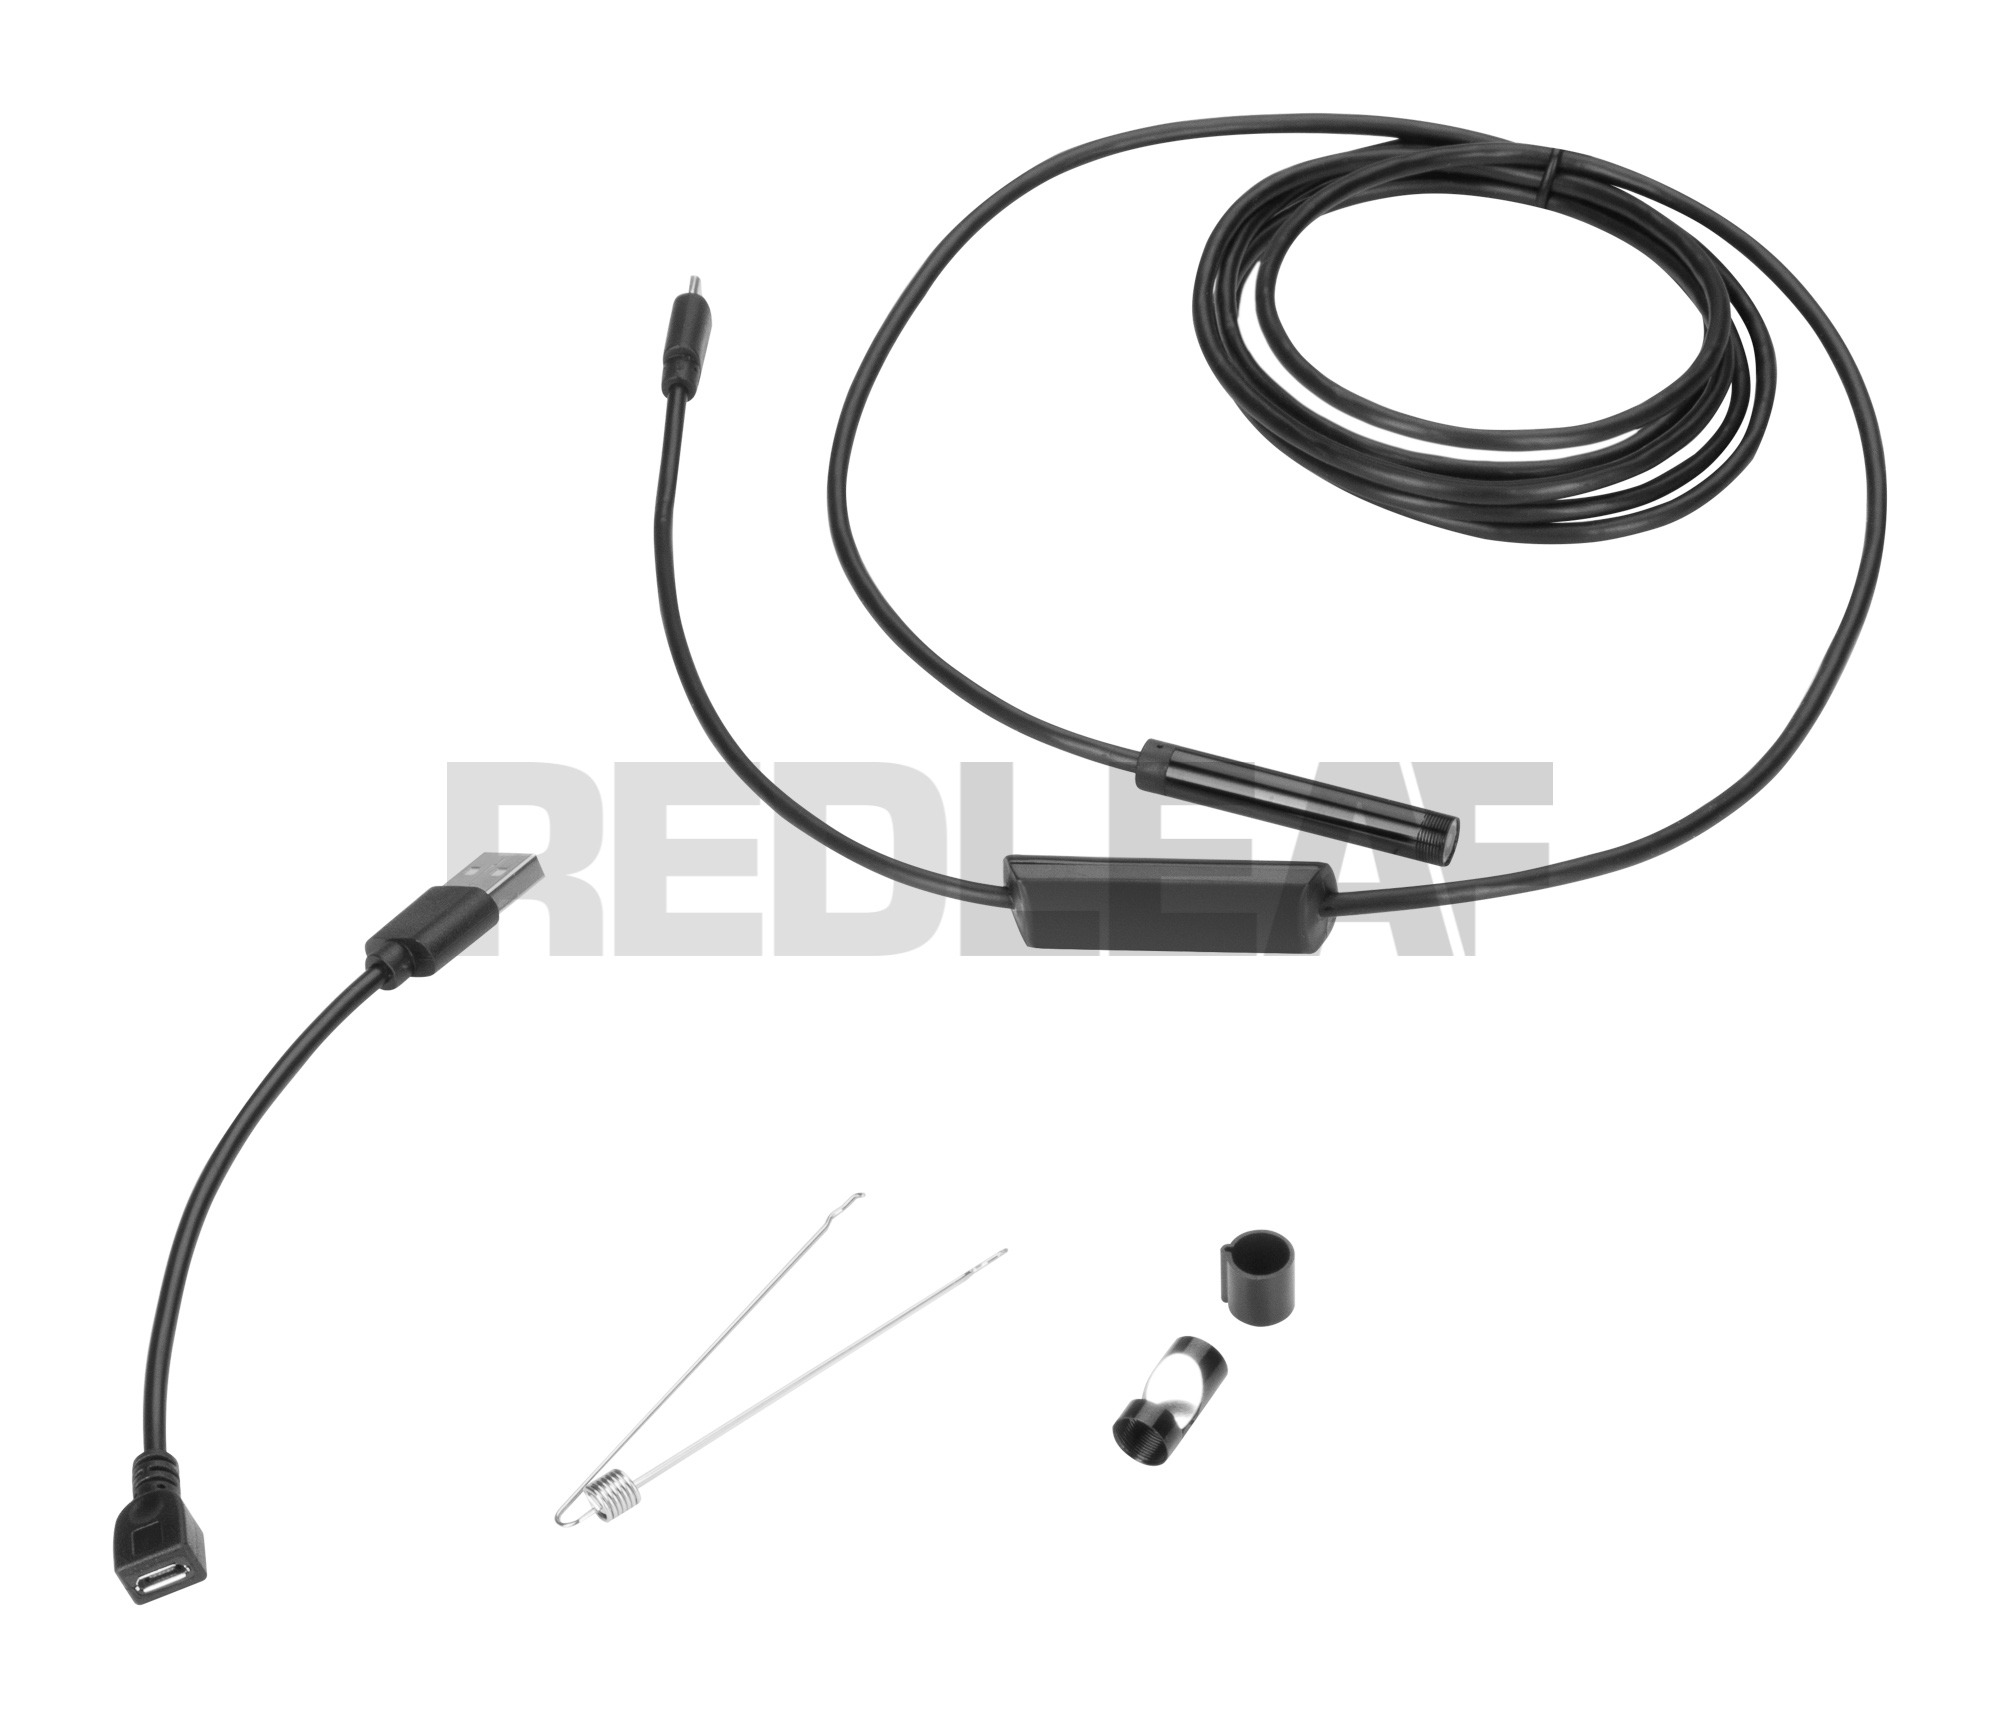 Endoskop-USB-Redleaf-RDE-202US-elastyczny-kabel-2-m_01_HD